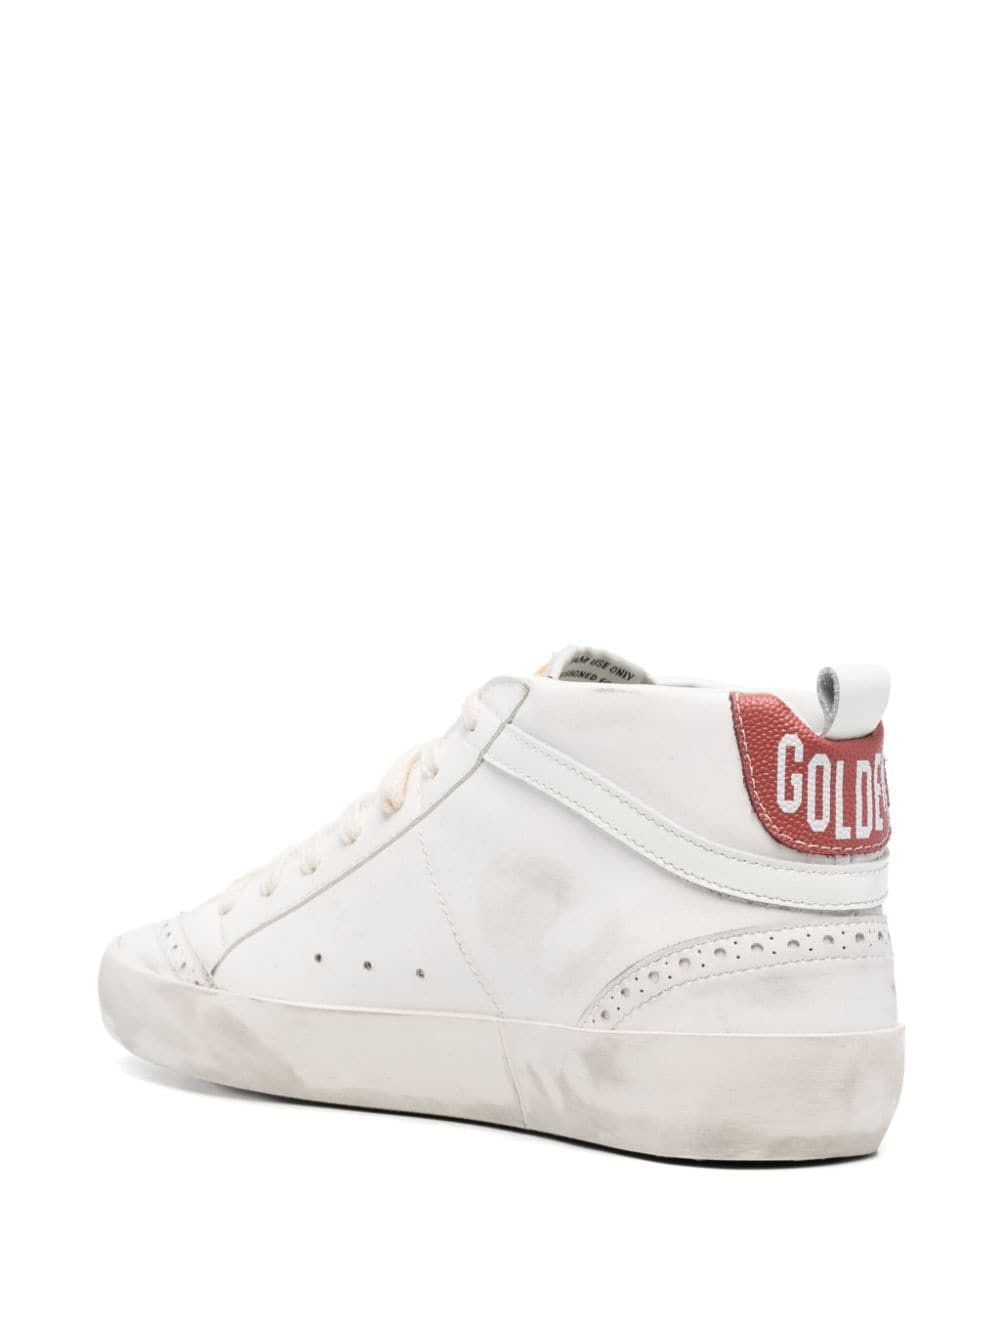 GOLDEN GOOSE Mistar Sneaker for Women - FW23 Collection